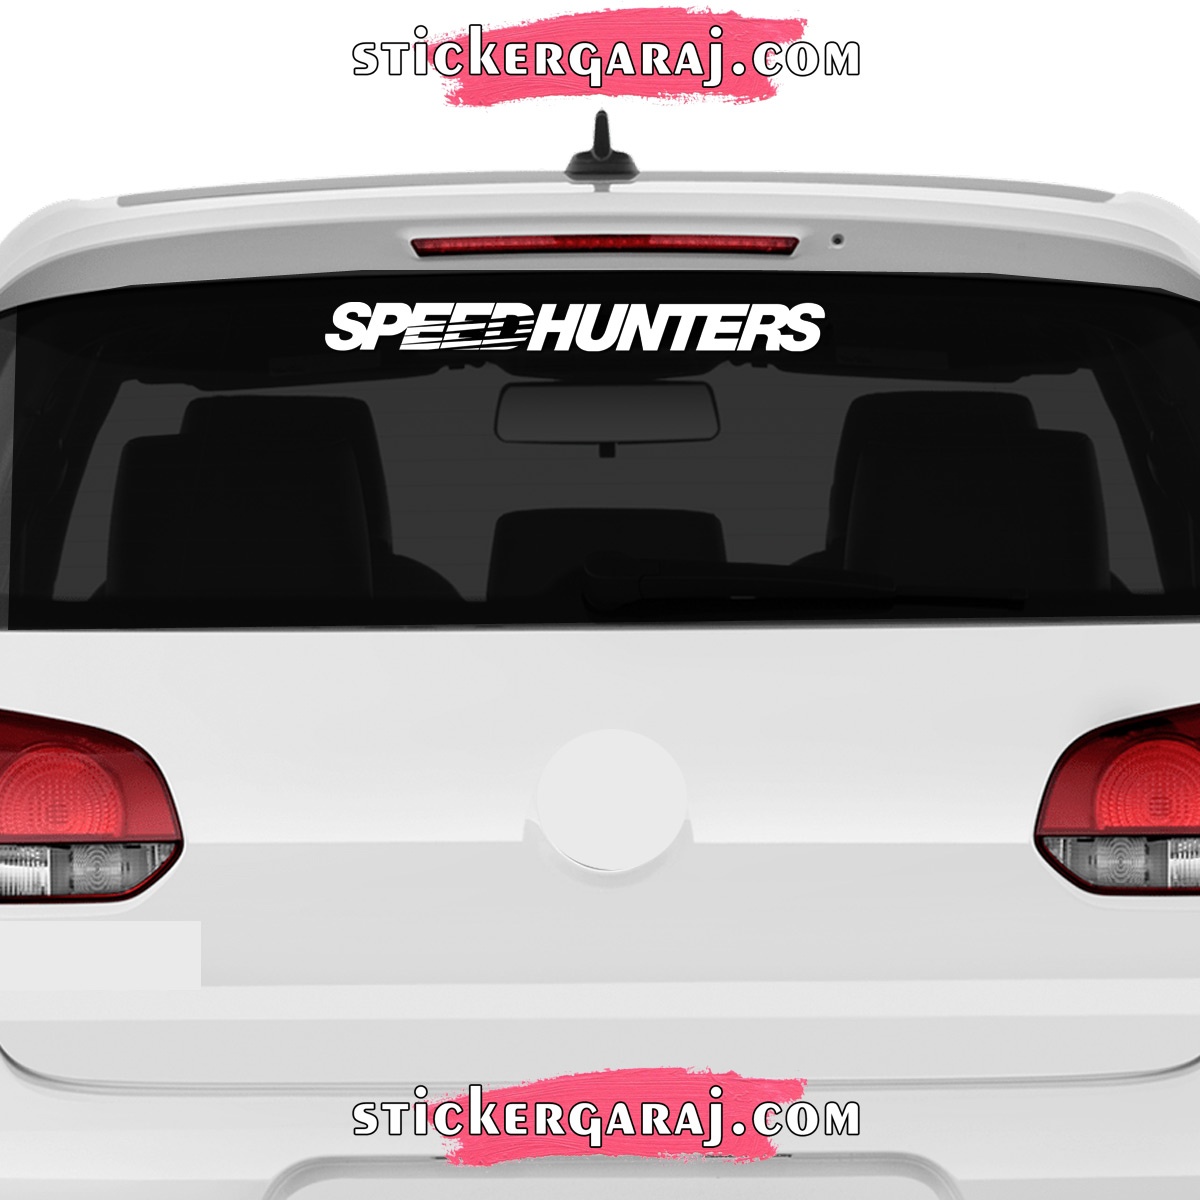 Hyundai cam sticker - Hyundai cam sticker - speedhunters